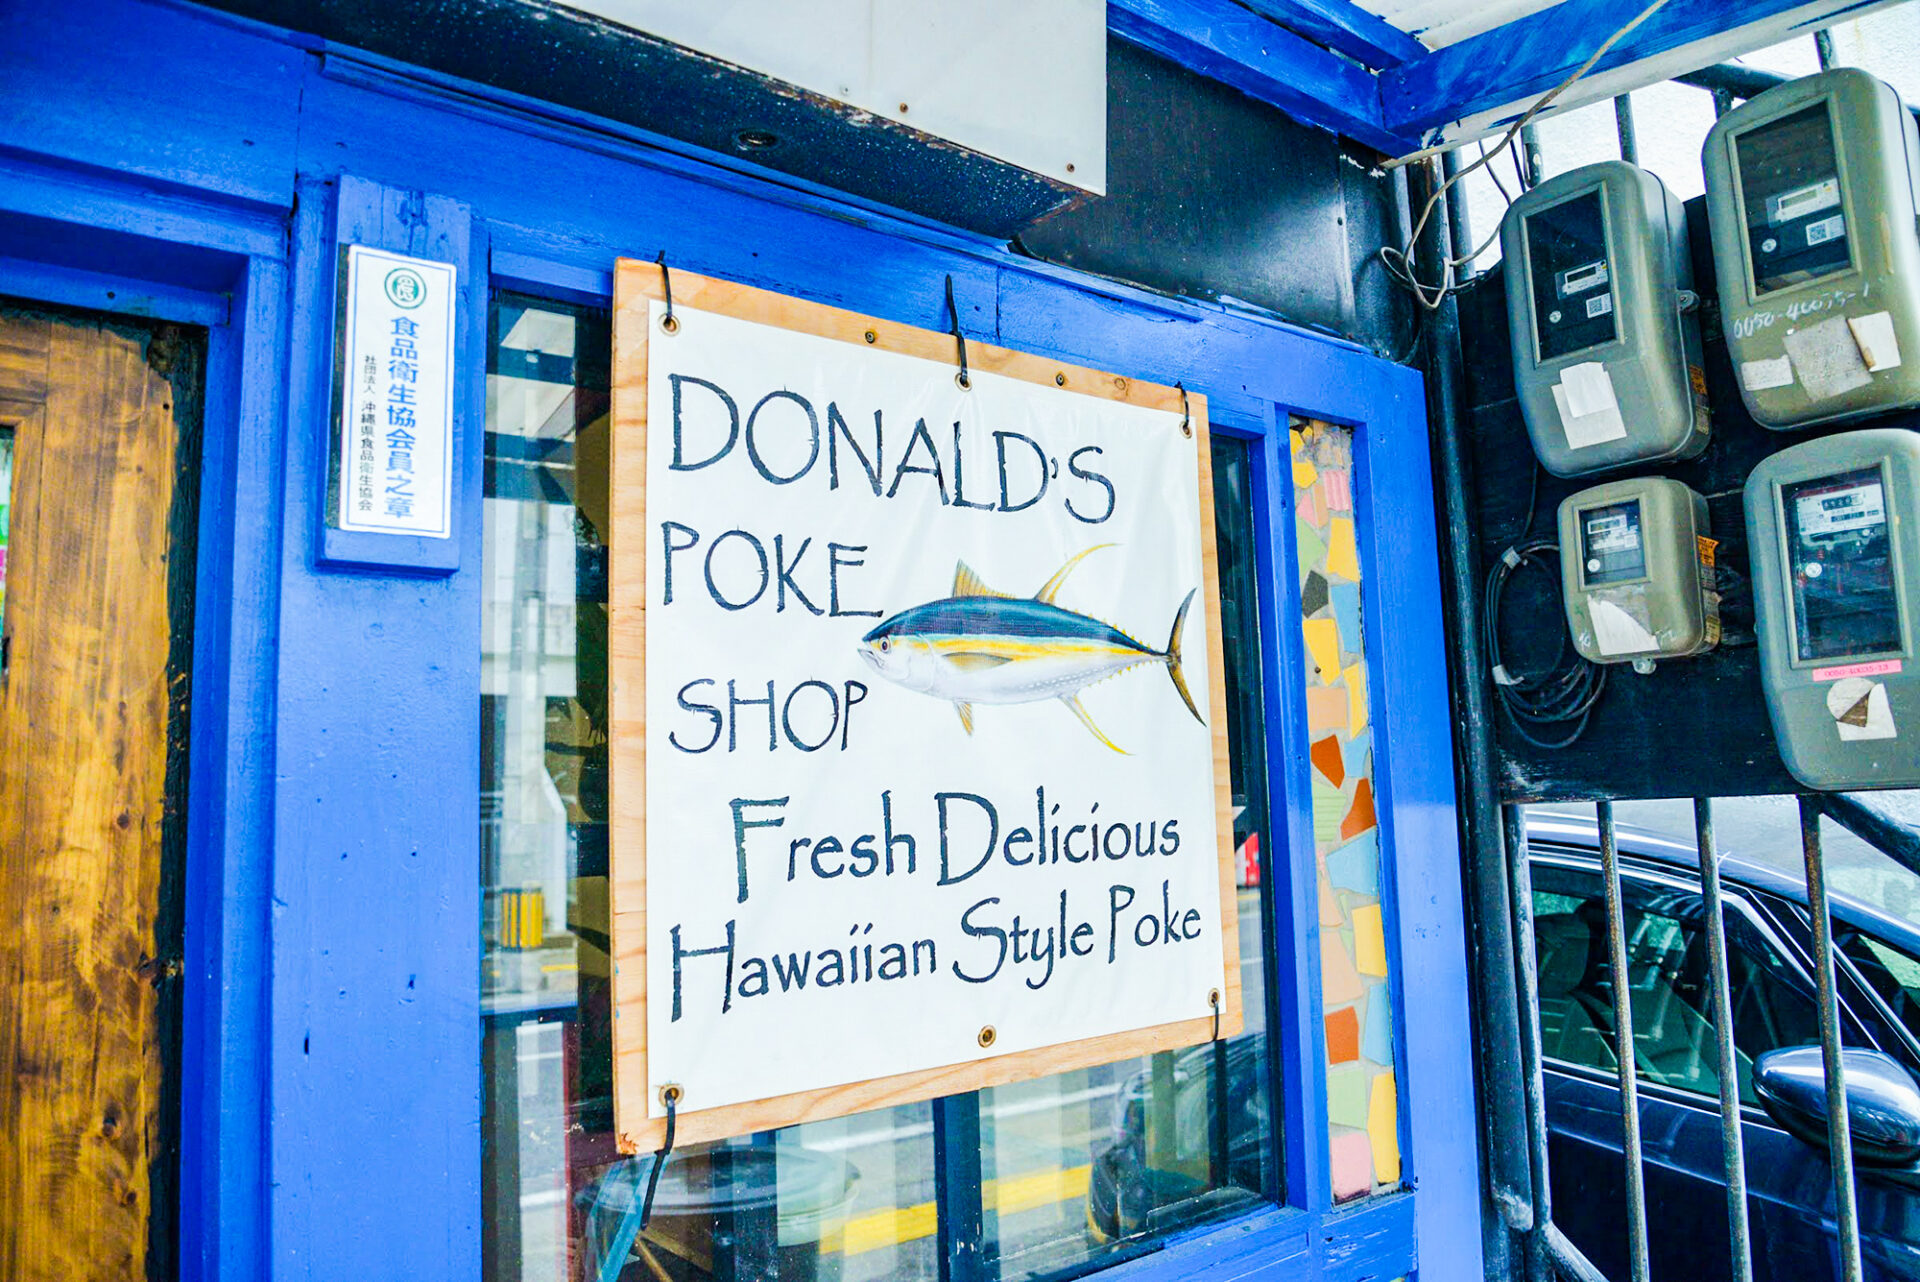 Donald’s Poke Shop